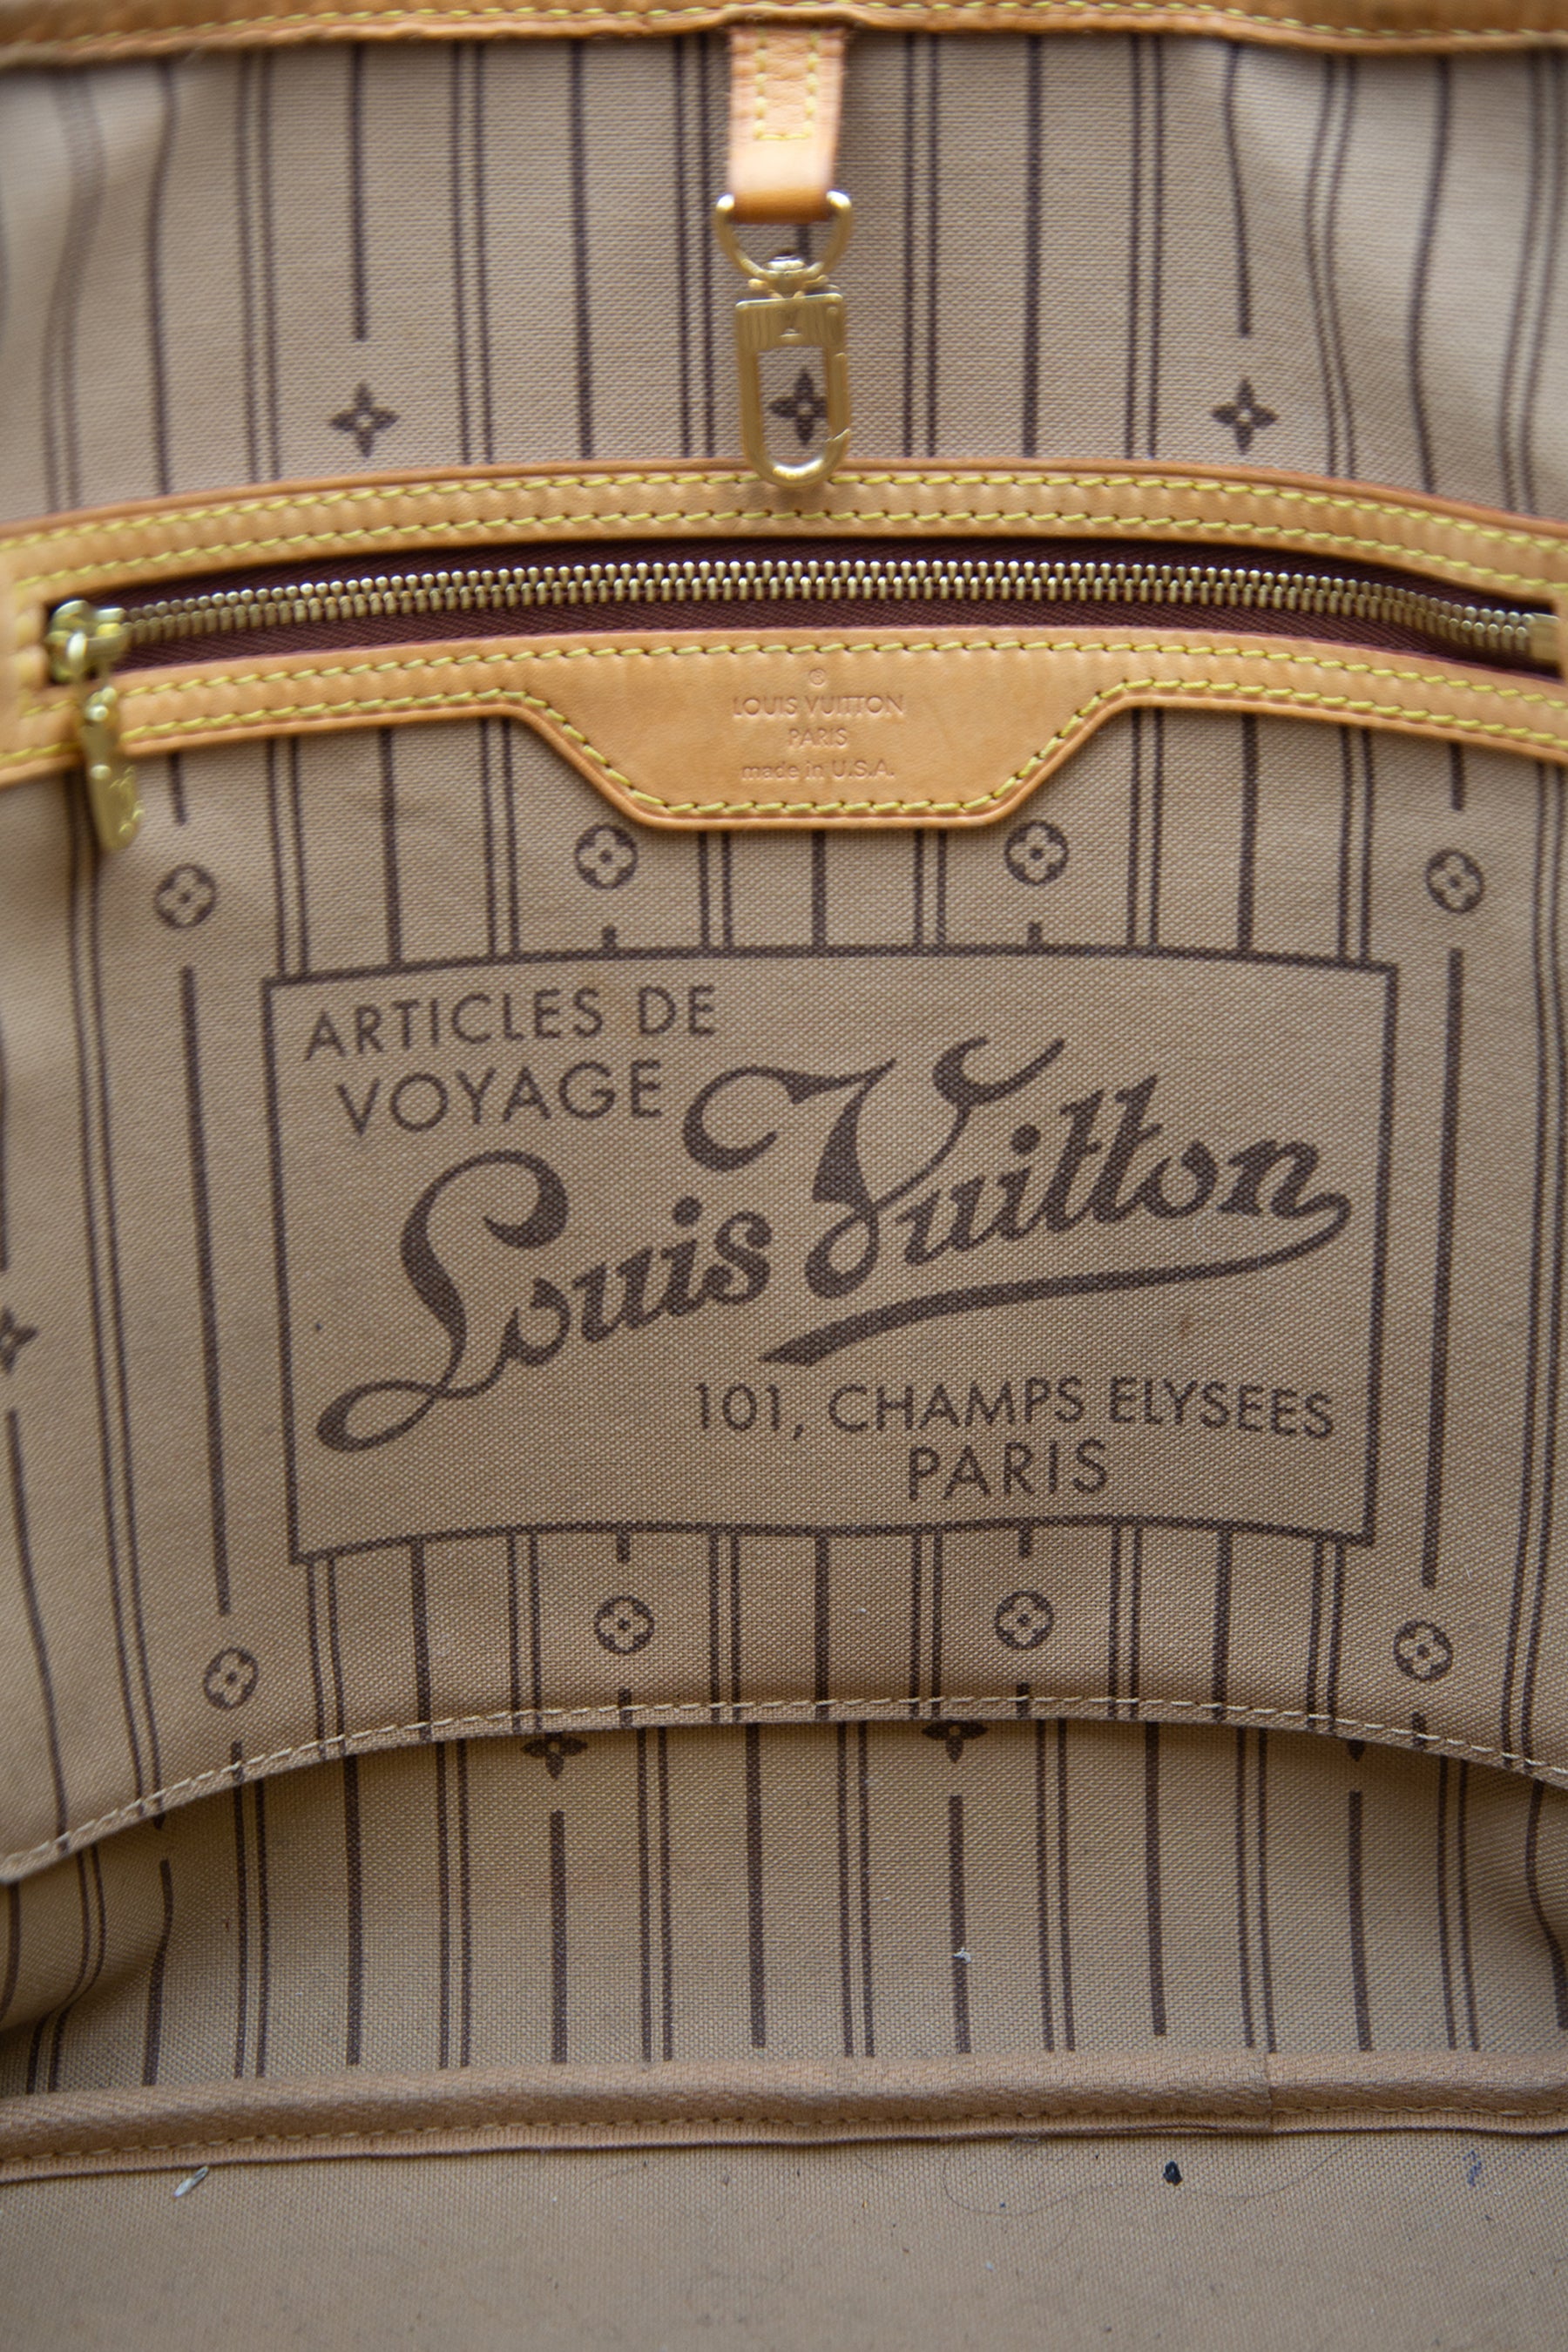 Louis Vuitton Dora Pink Canvas Handbag (Pre-Owned)